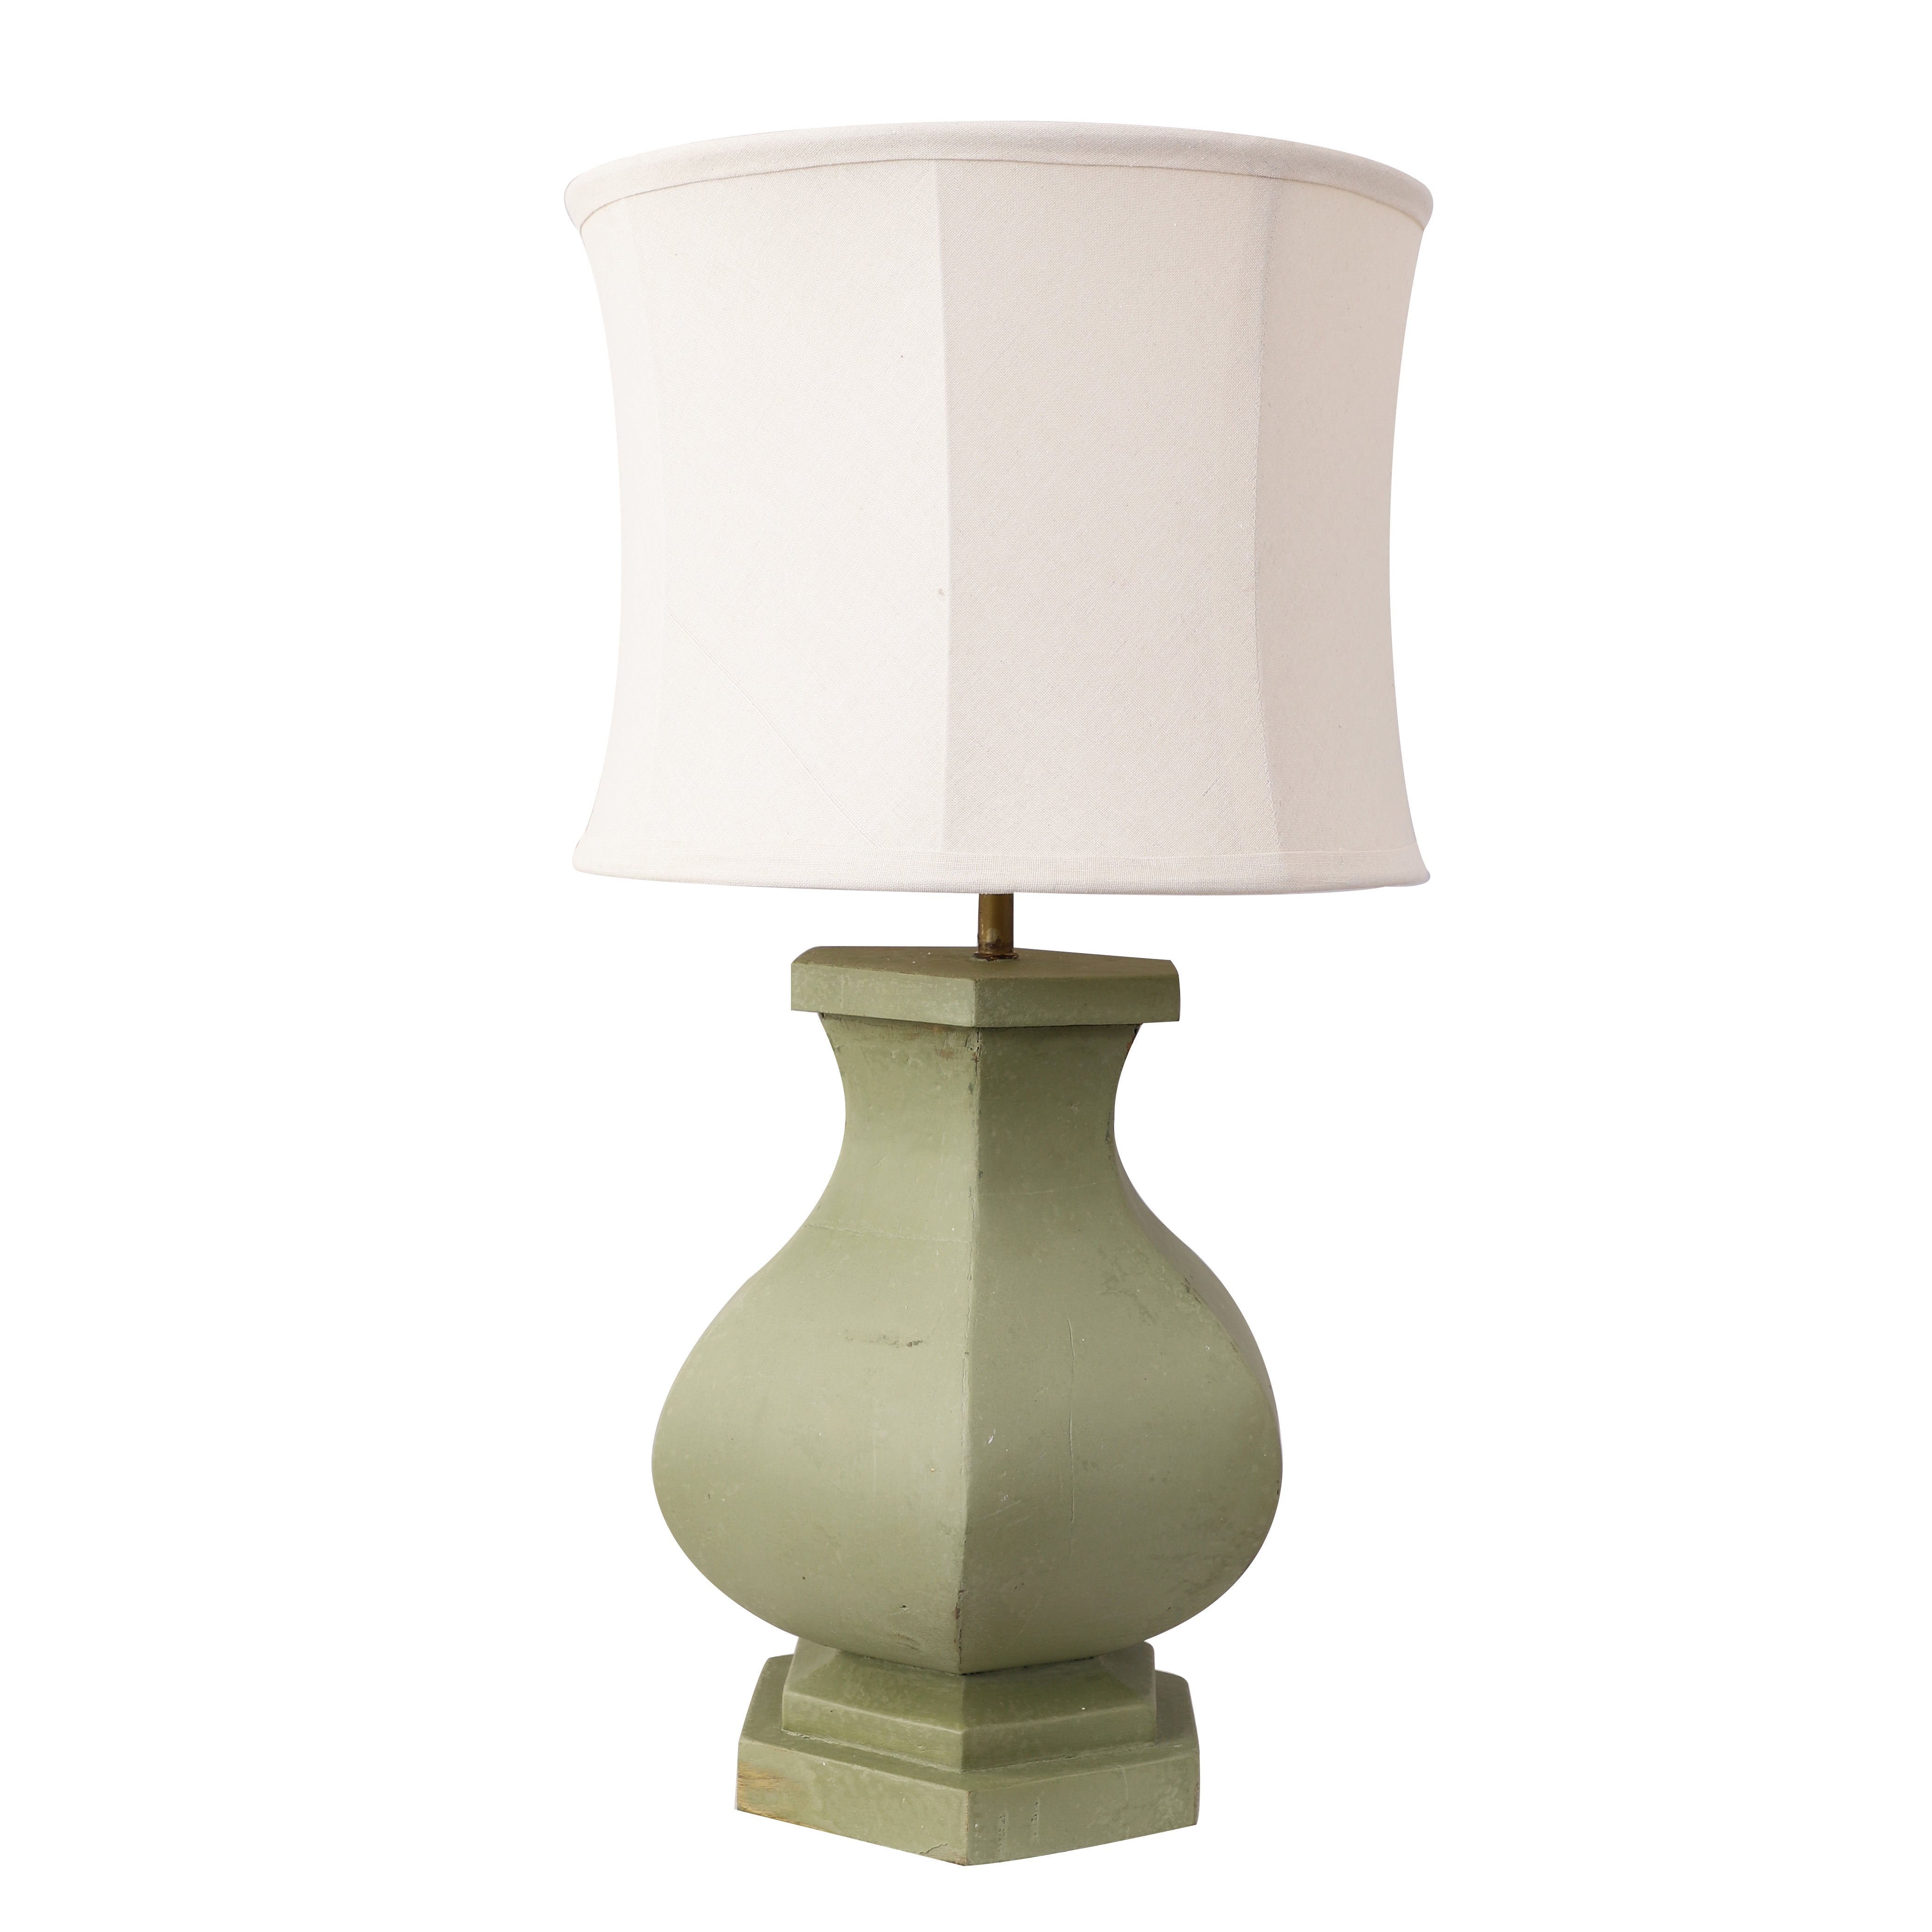 Evergreen Rustic Table Lamp